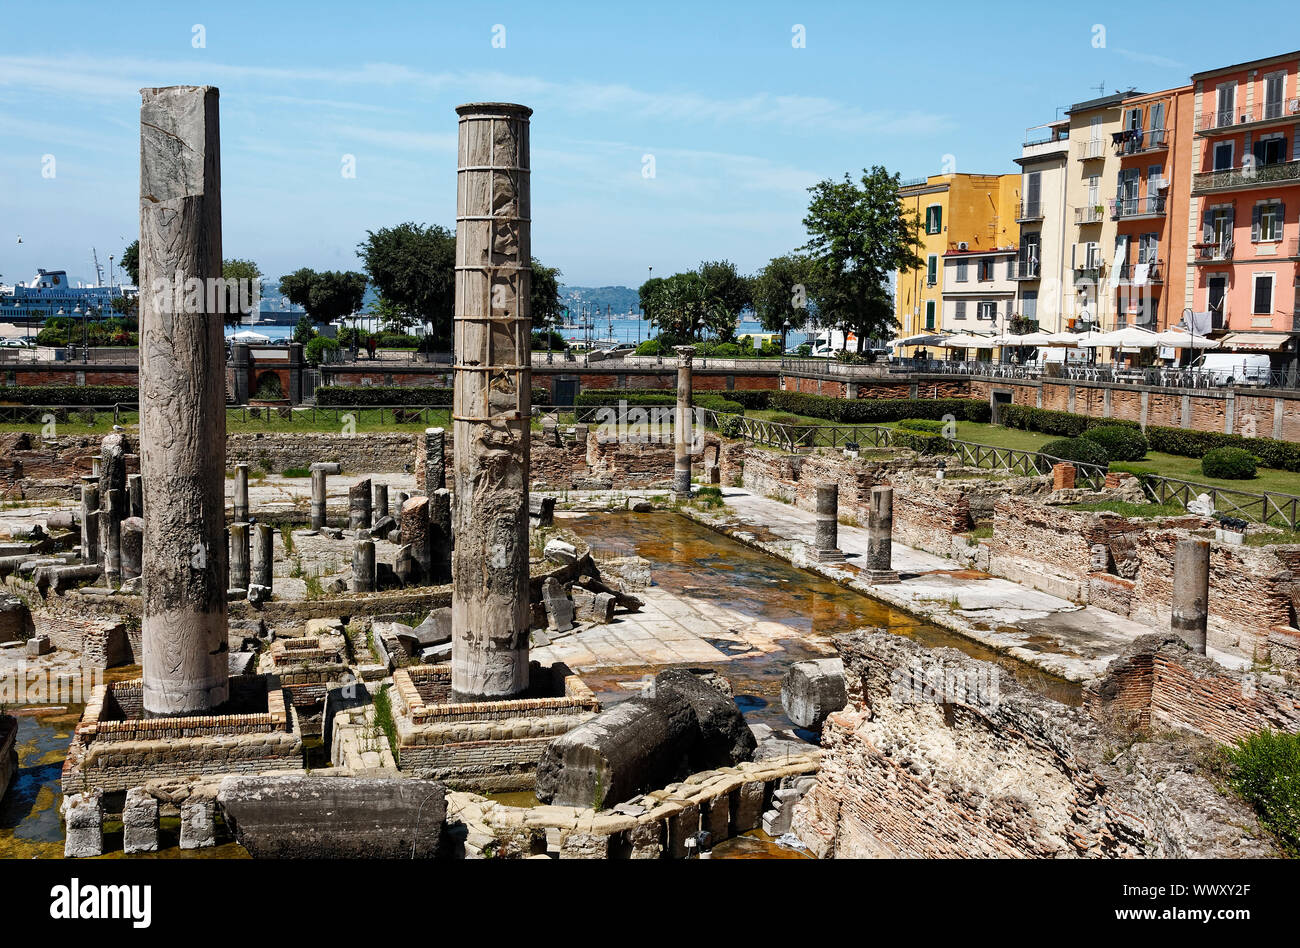 Macellum di Pozzuoli; Tempi di Serepide; market; columns measure height of sea level; 1st century; old ruins; buildings, restaurant, outdoor tables, u Stock Photo